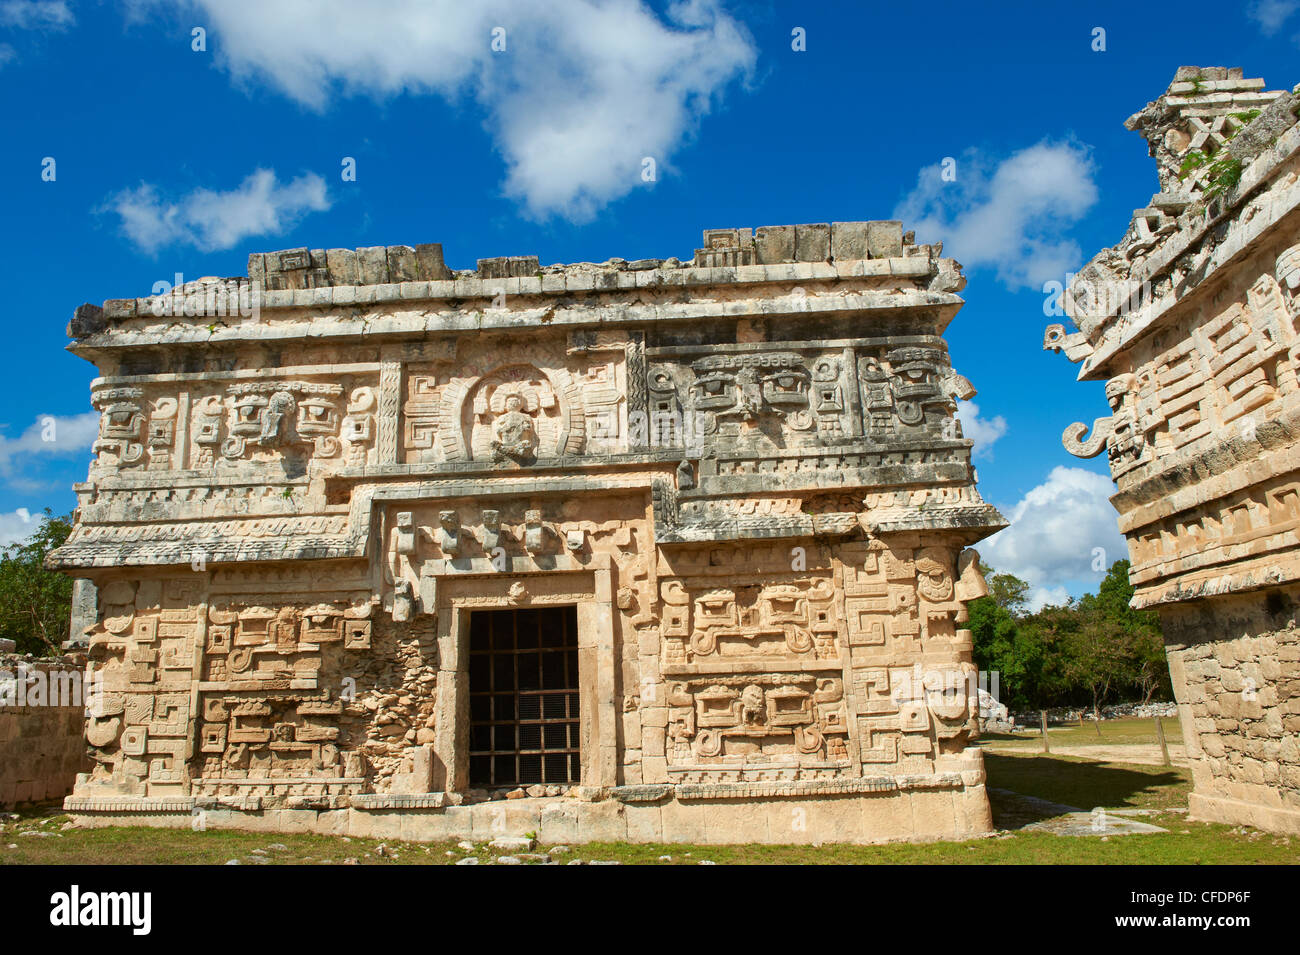 The church in ancient Mayan ruins, Chichen Itza, UNESCO World Heritage Site, Yucatan, Mexico, Stock Photo